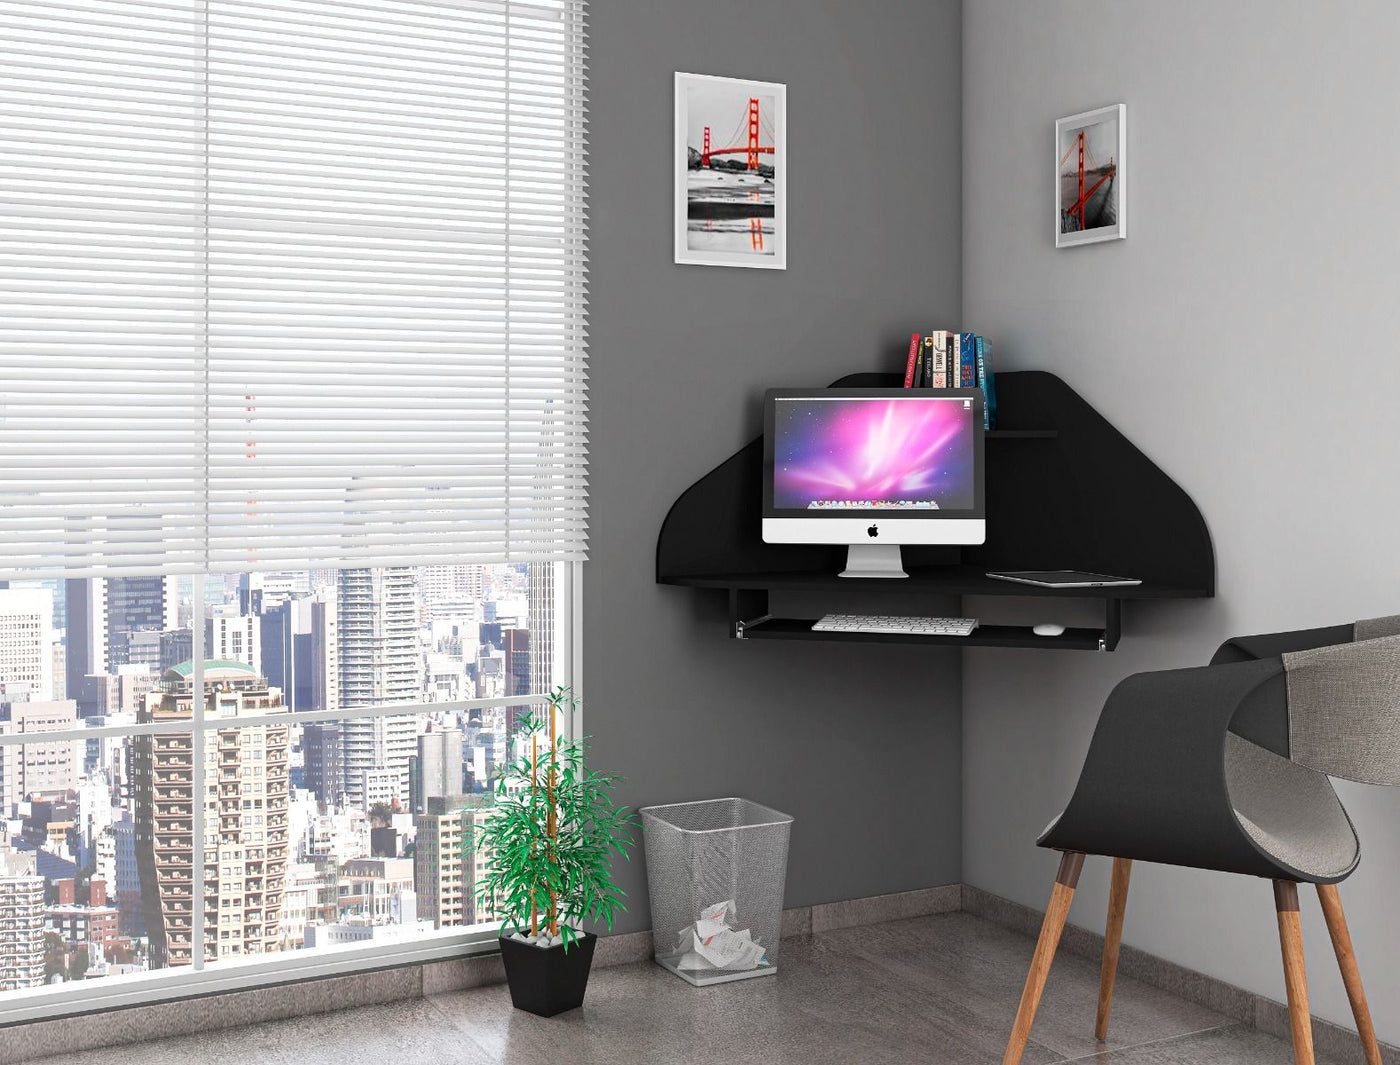 Gatutca Floating Corner Desk with Keyboard Shelf - Black